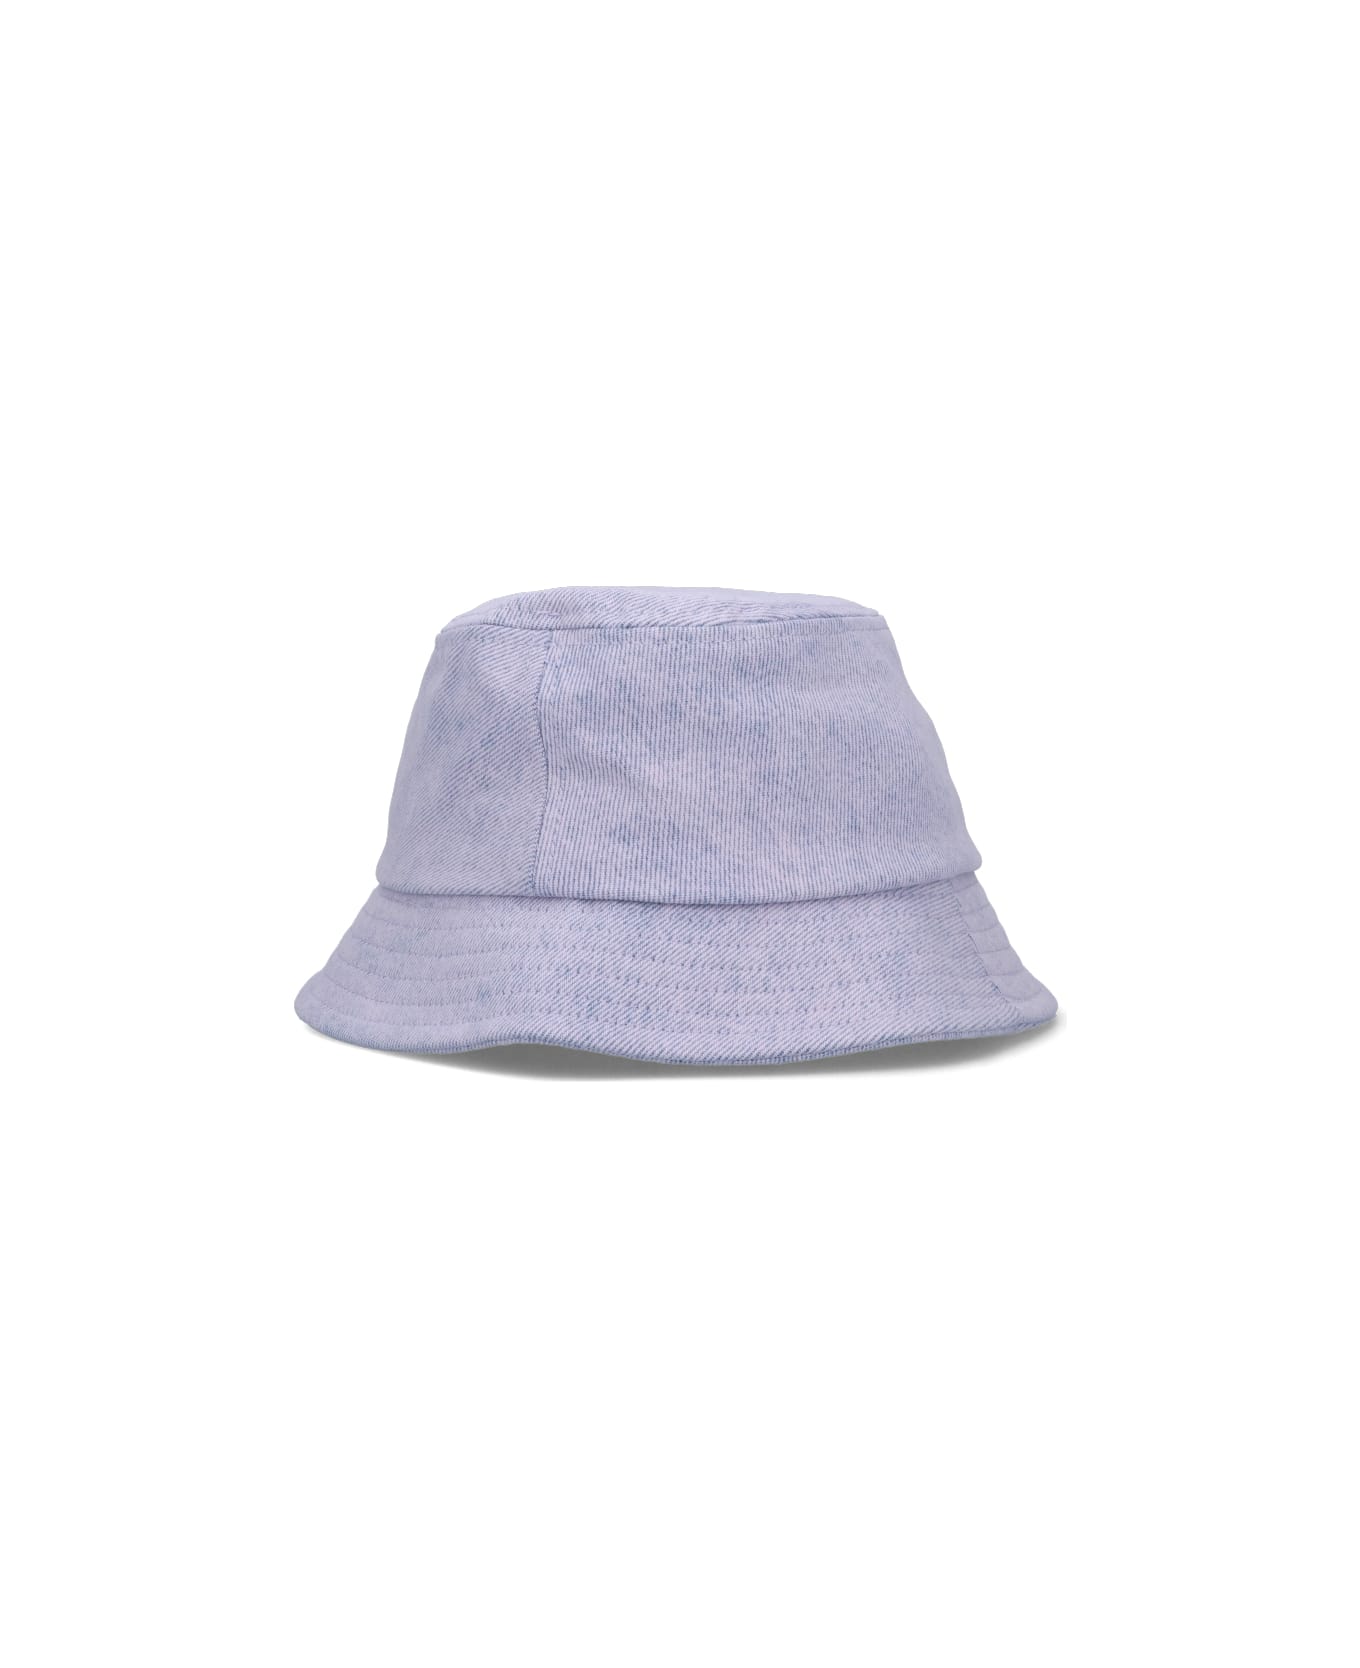 Isabel Marant Haley Bucket Hat - Violet 帽子